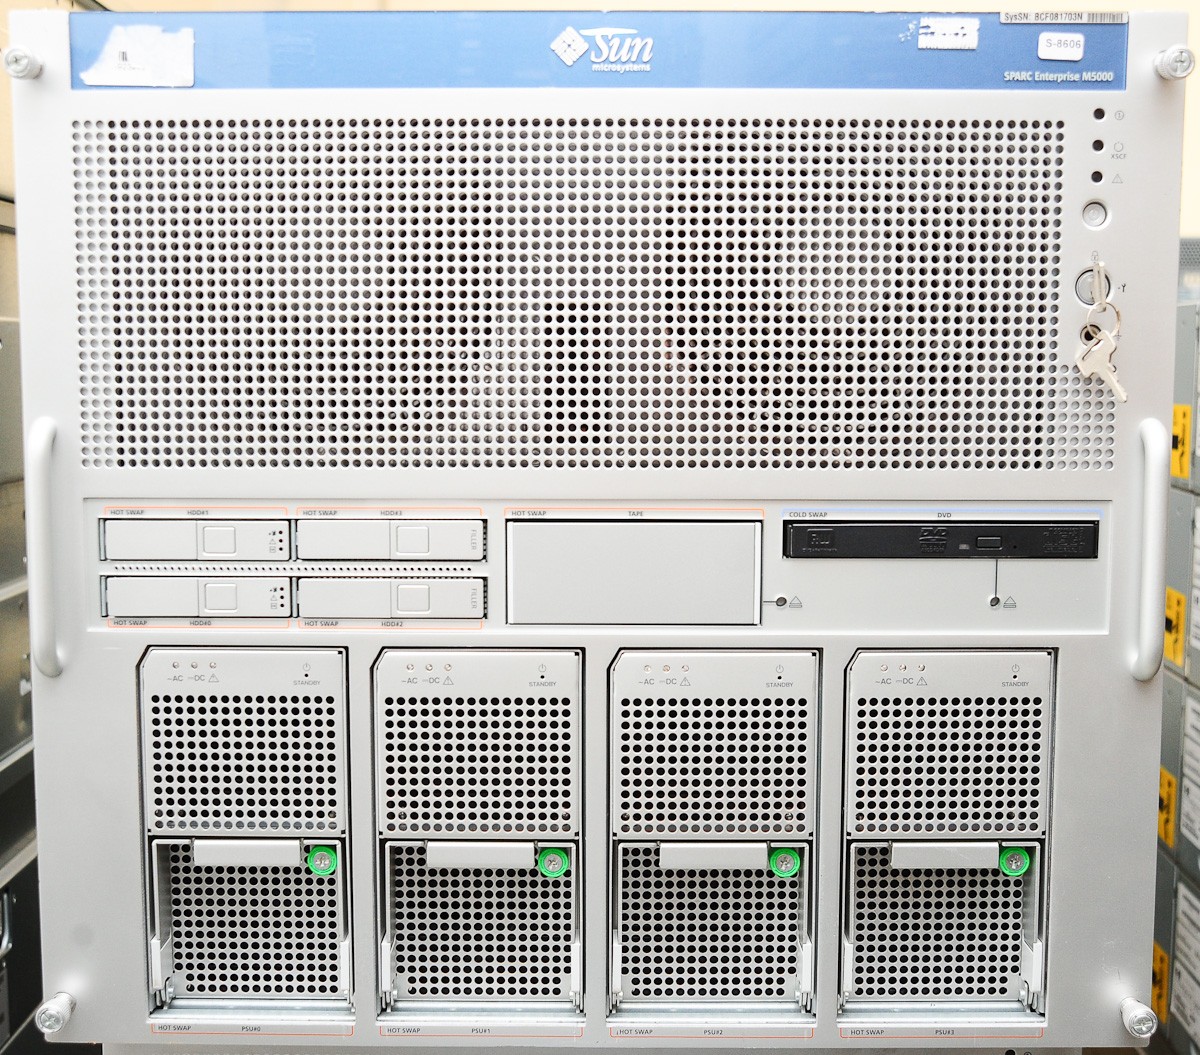 M5000 Server